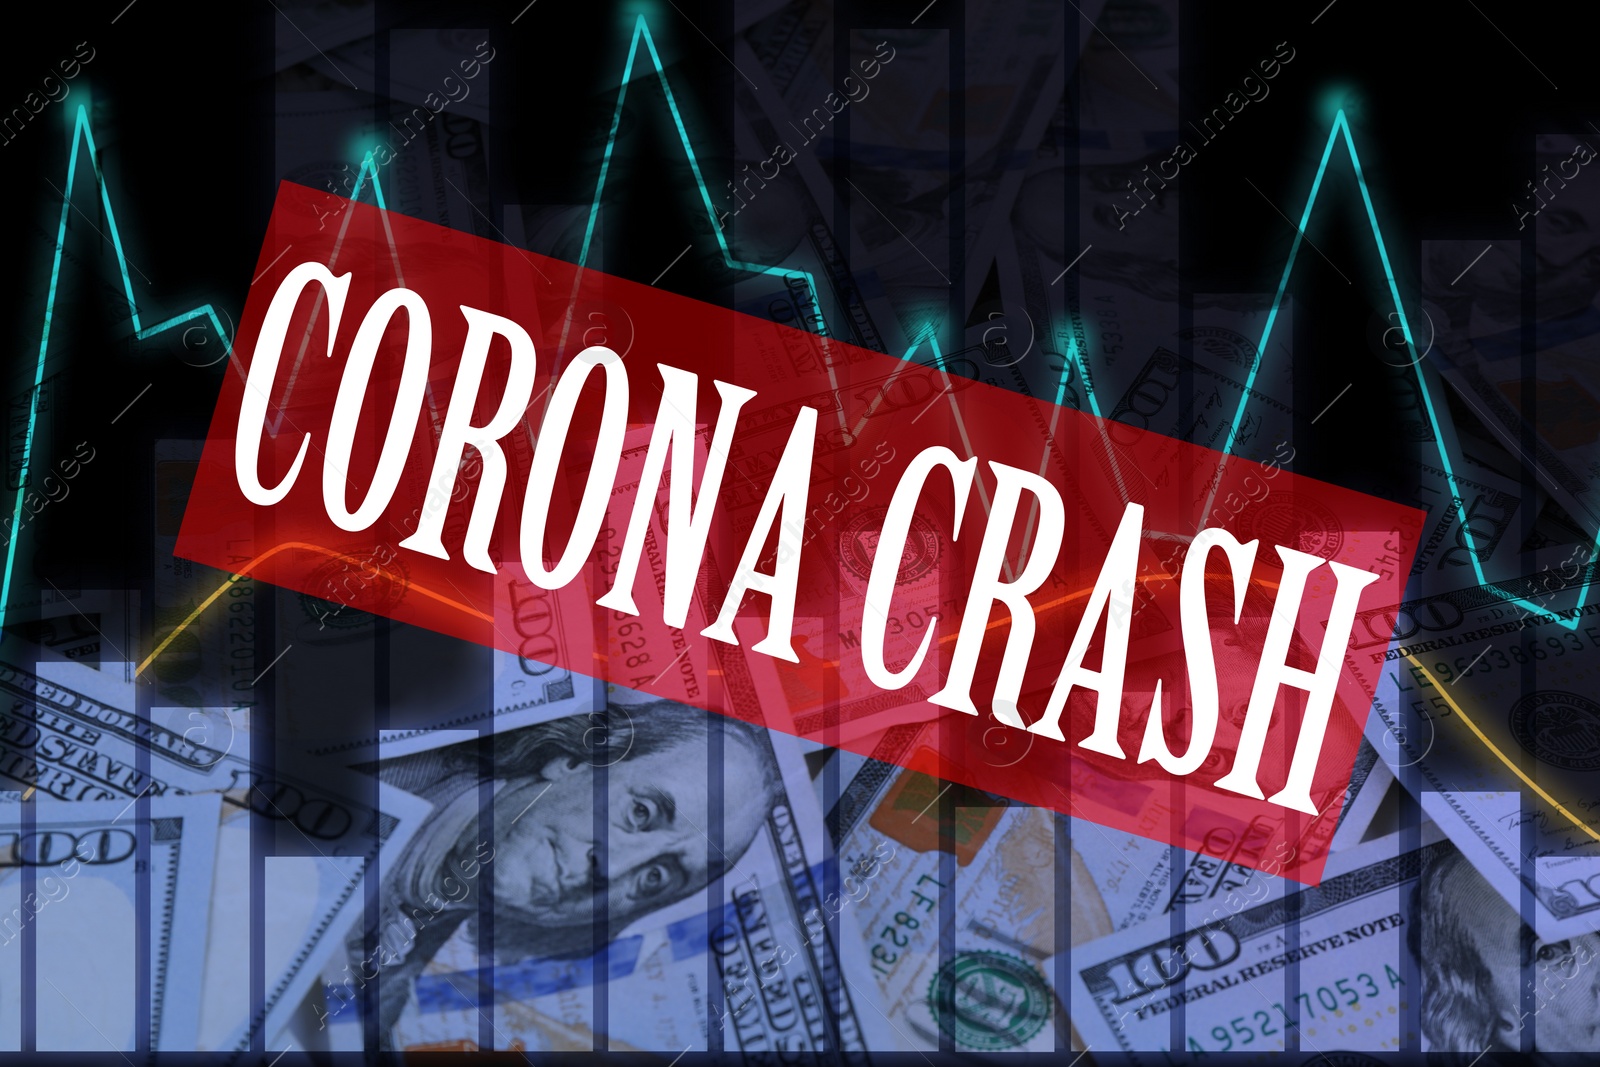 Image of Text CORONA CRASH and dollar banknotes on background